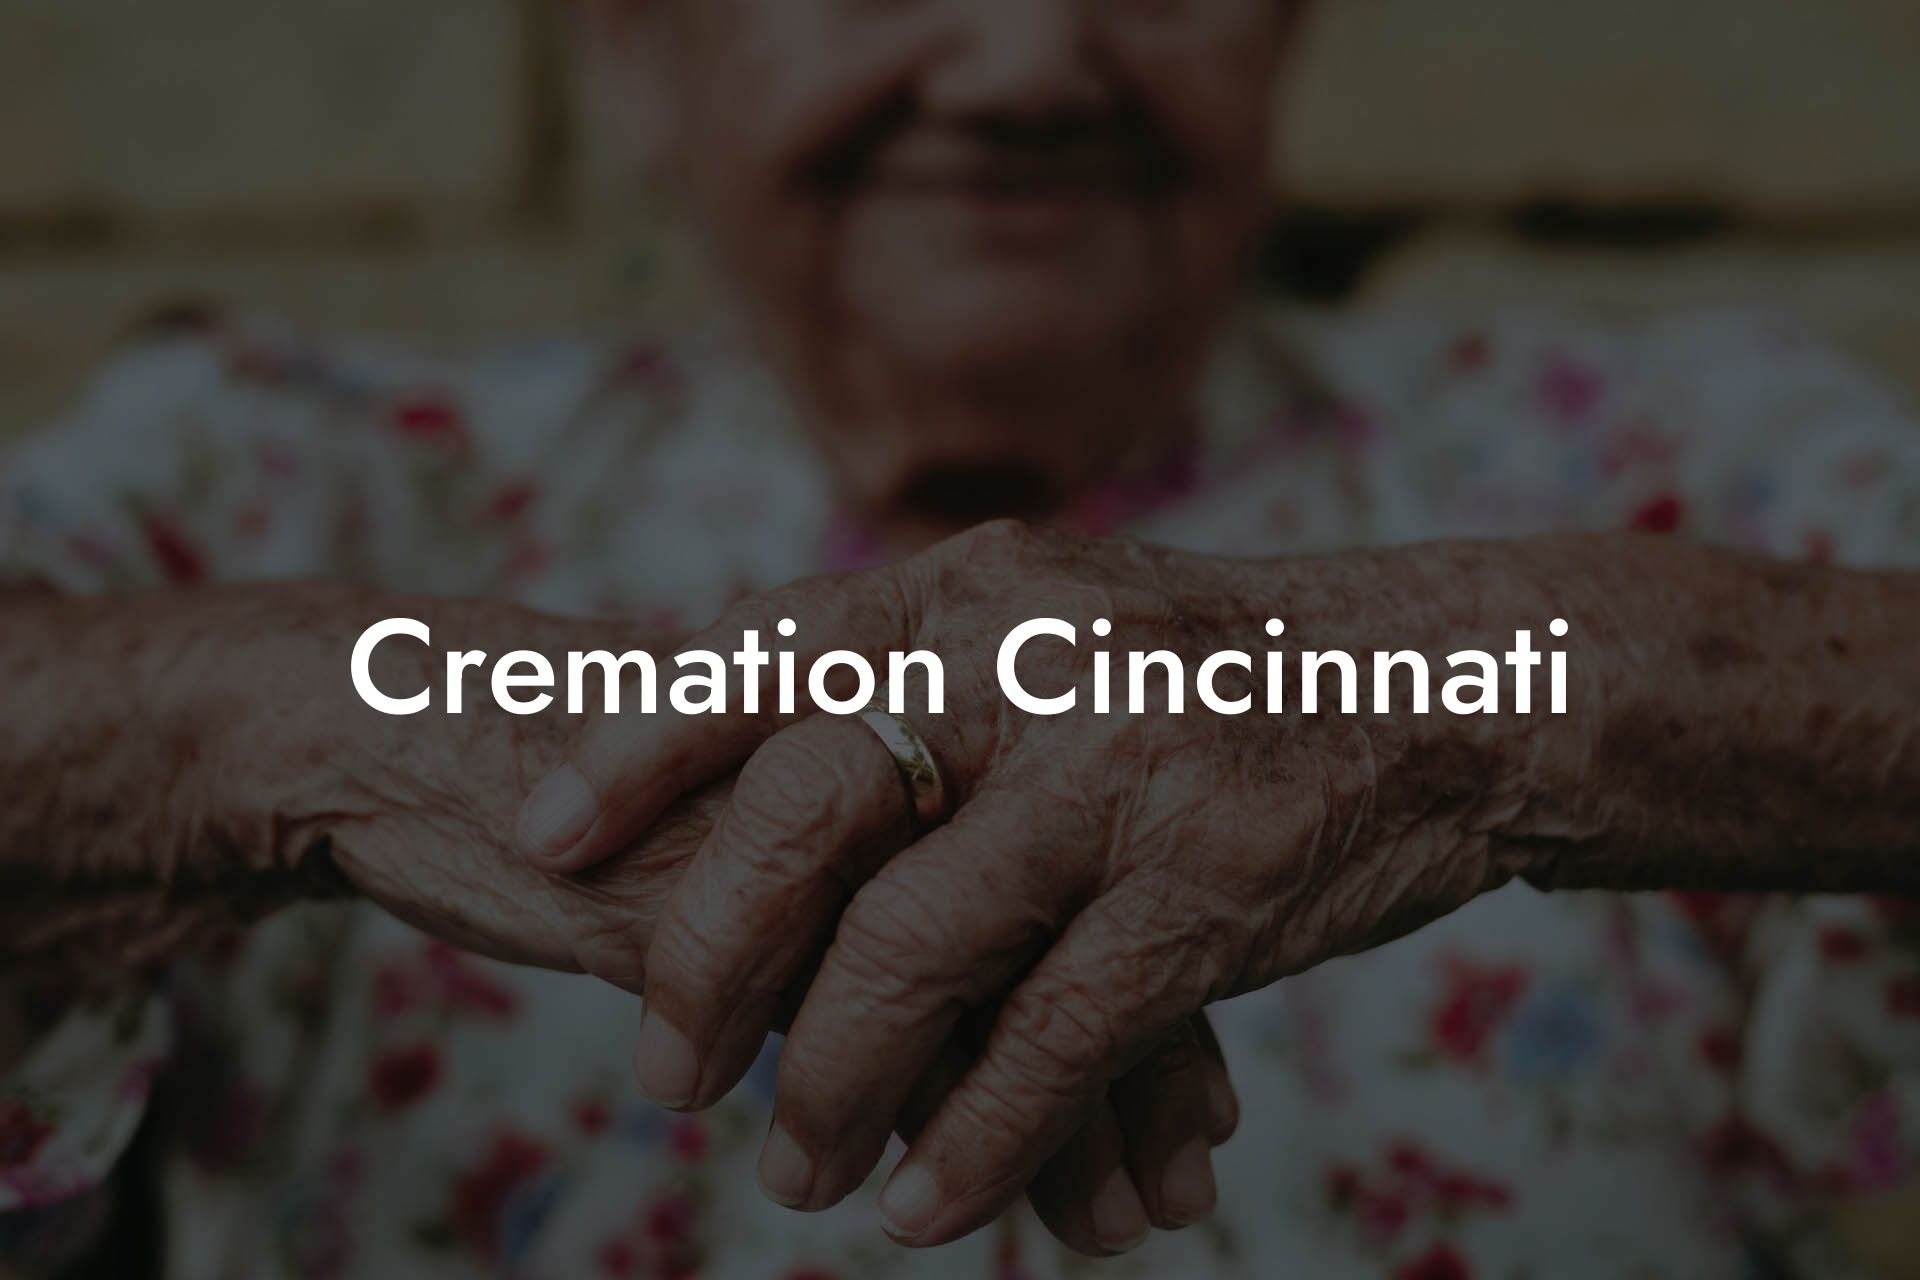 Cremation Cincinnati